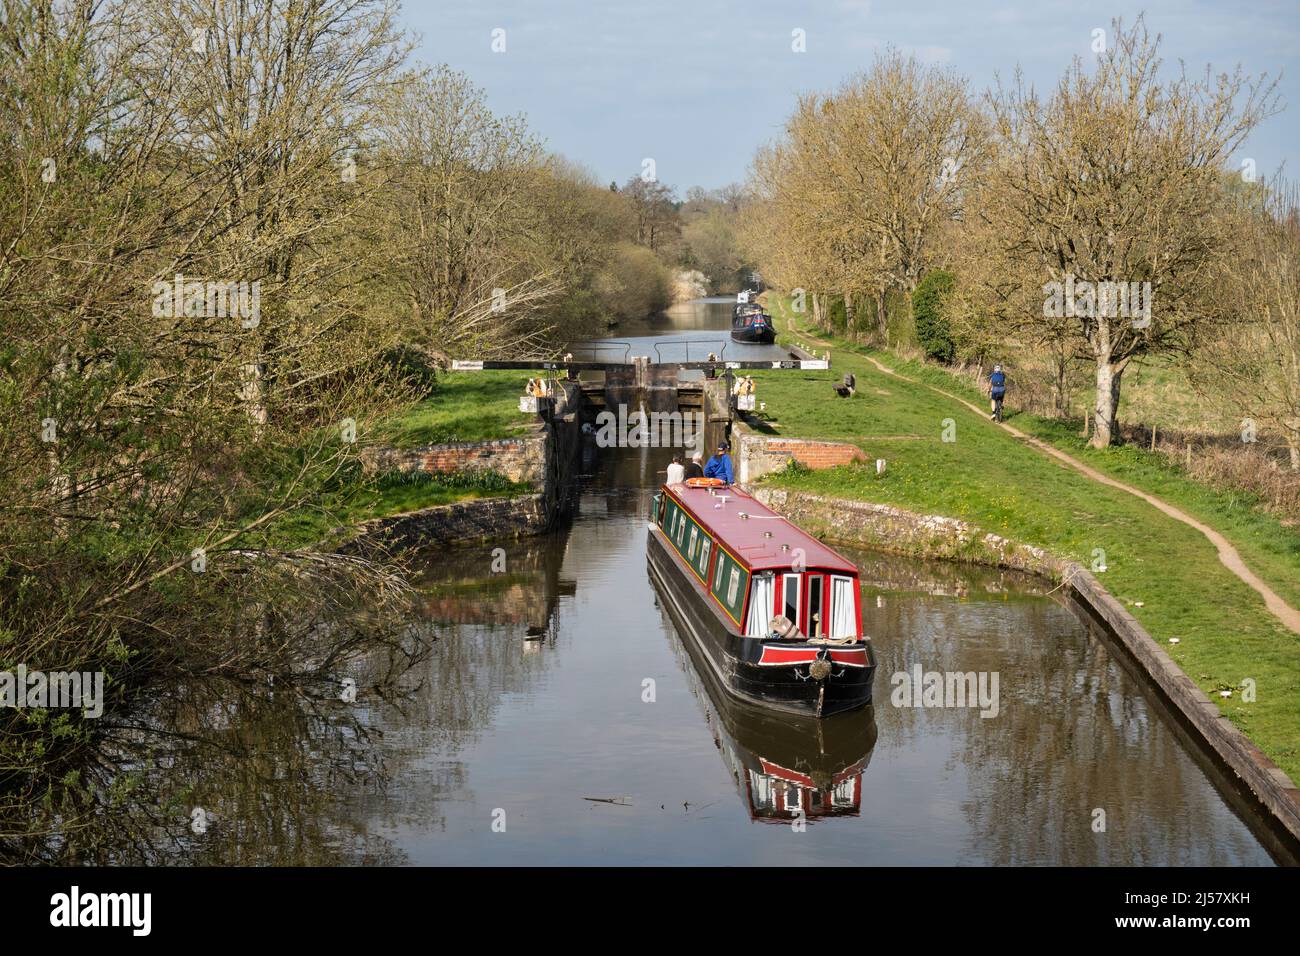 Benham Lock en el canal Kennet y Avon en el fin de semana de Semana Santa, Marsh Benham, cerca de Newbury, Berkshire, Inglaterra, Reino Unido, Europa Foto de stock